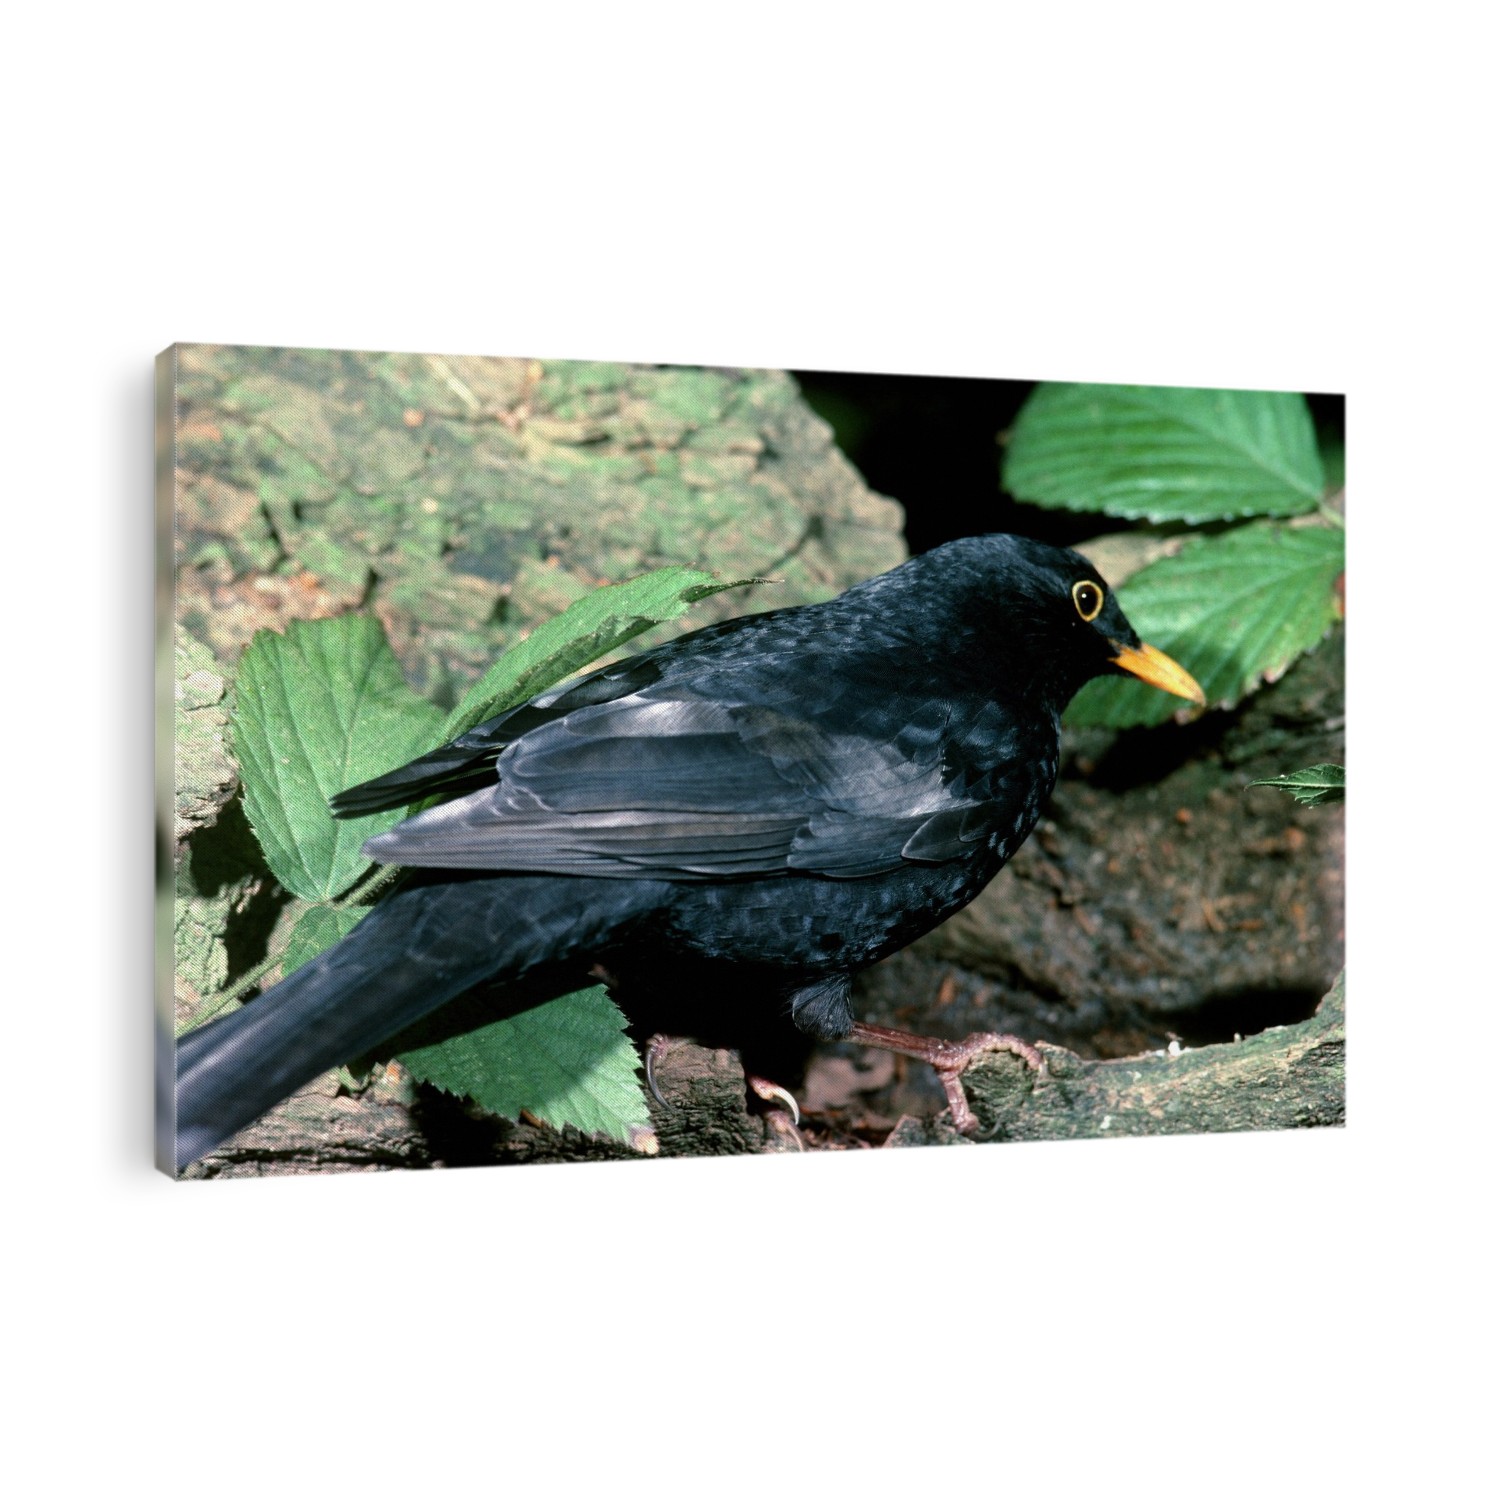 Blackbird. Turdus merula, single bird.